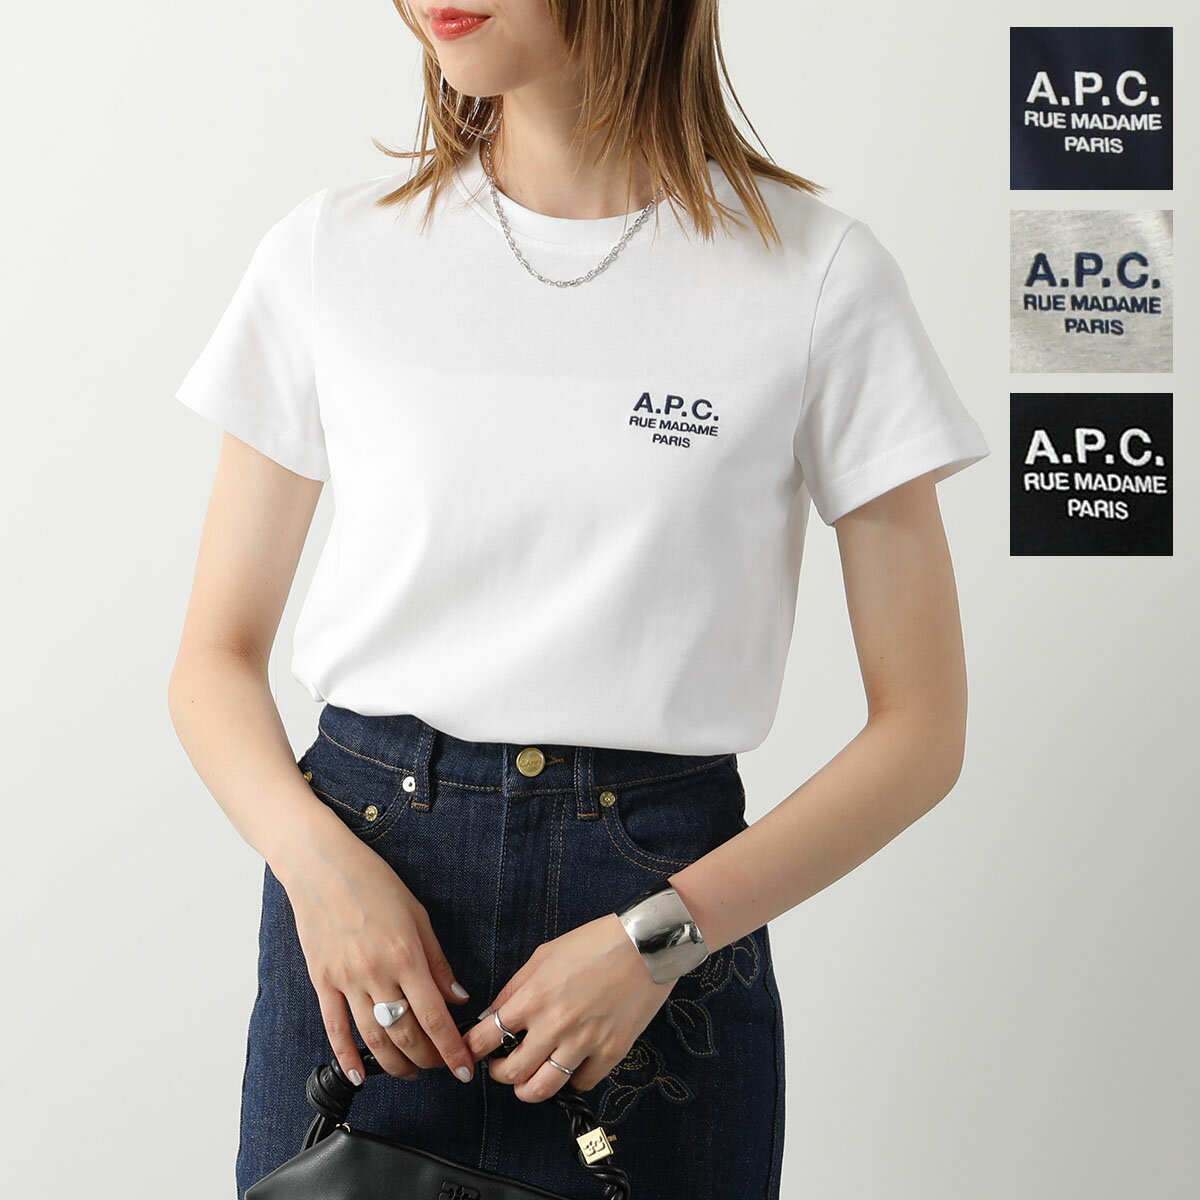 APC A.P.C. アーペーセー 半袖 Tシャツ COEZC F26842 denise レディース クルーネック カットソー ロゴ刺繍 カラー4色